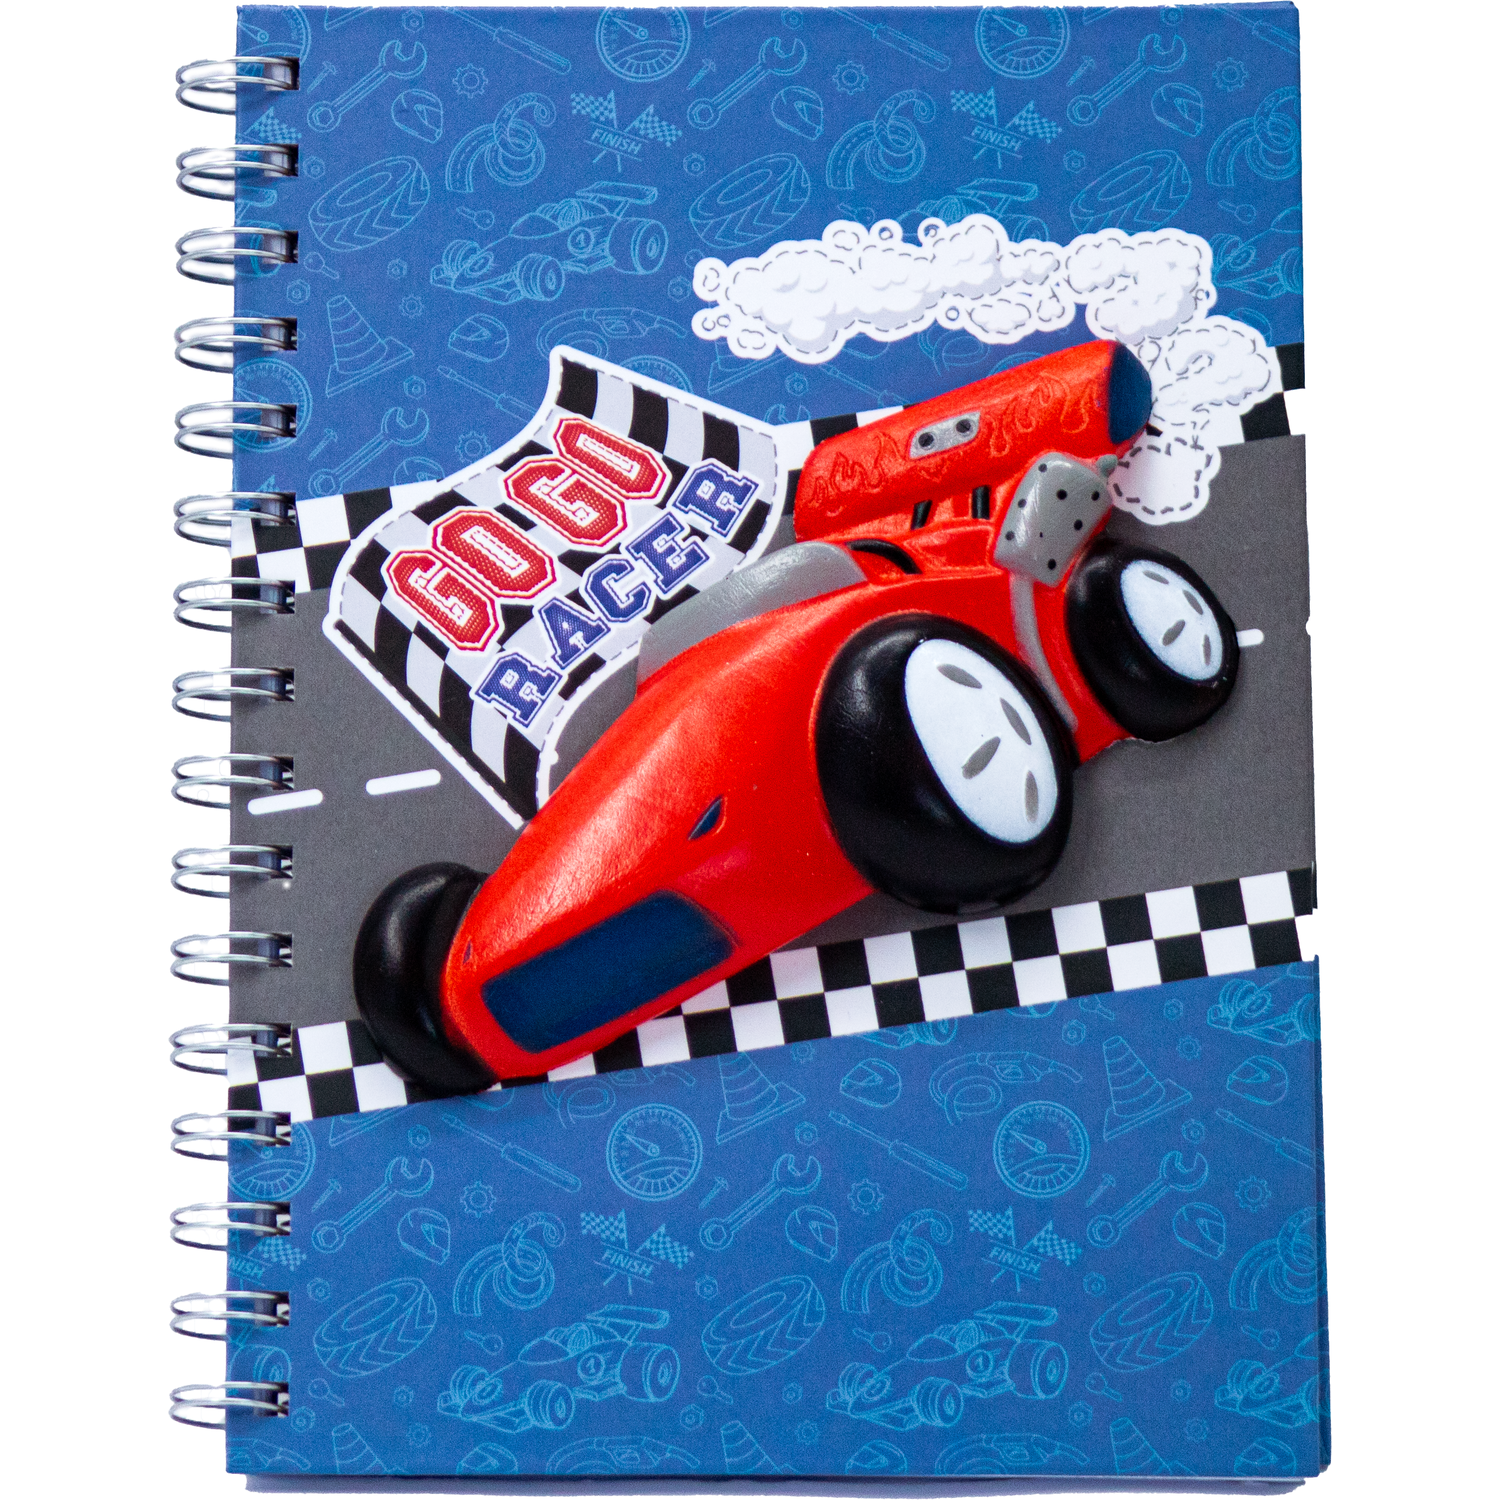 Go Go Racer Squishy Car Notebook - Blue Image 1